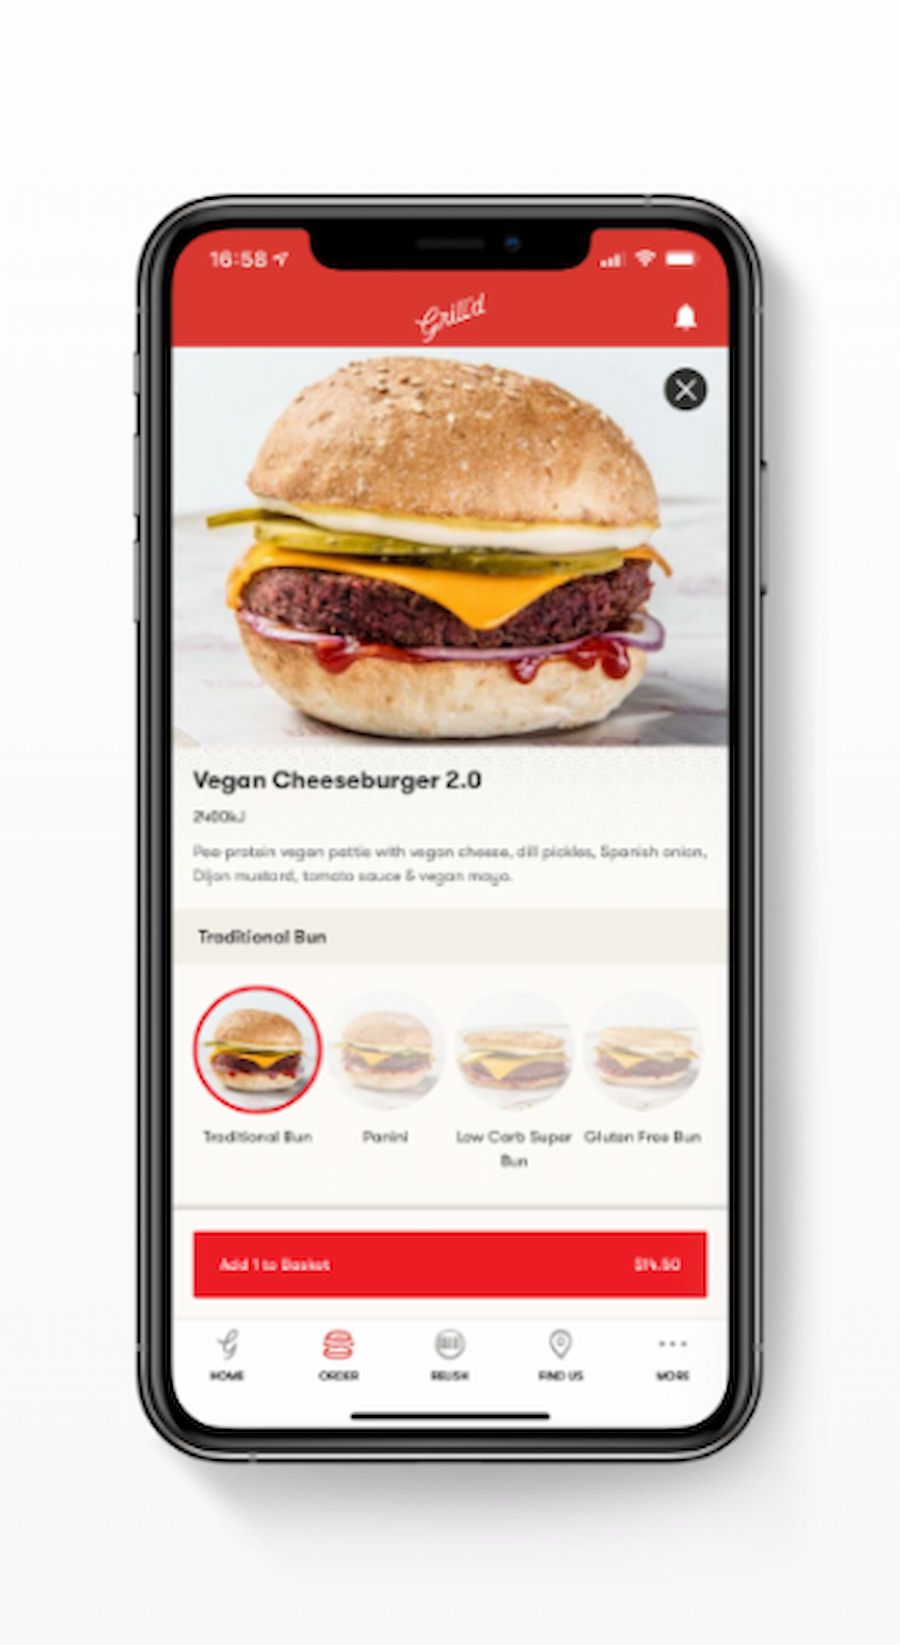 HHIITMAA: Grill'd mobile app screenshot